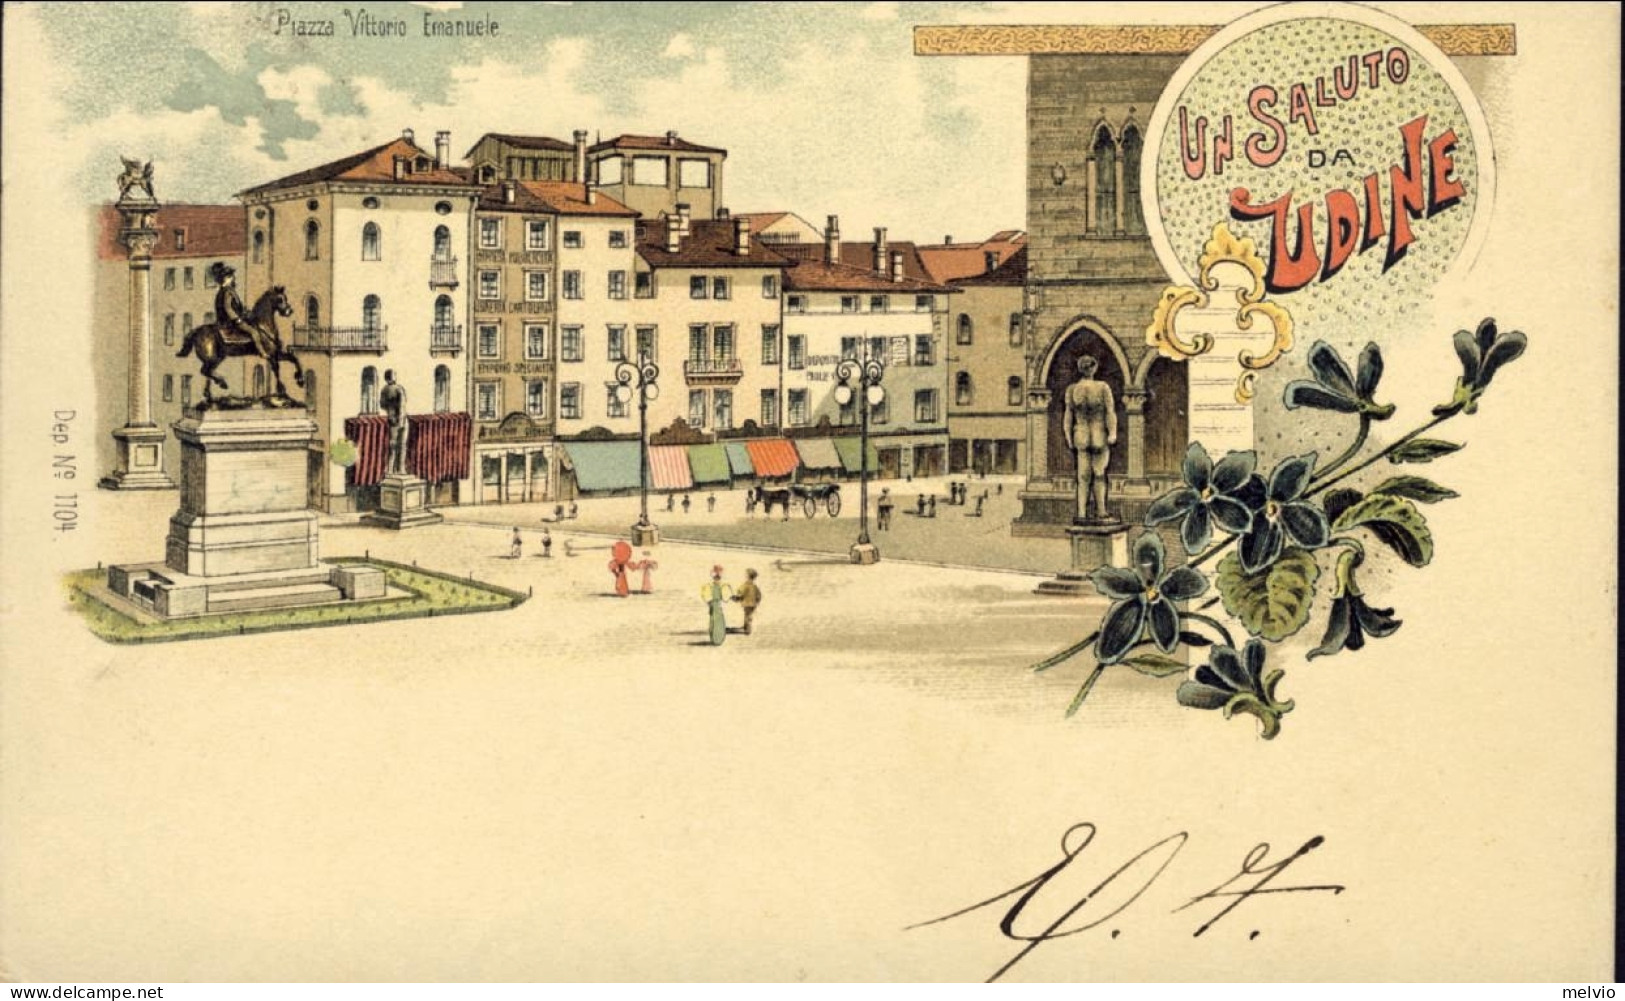 1899-Un Saluto Da Udine Piazza Vittorio Emanuele, Cartolina Tipo Gruss Viaggiata - Udine